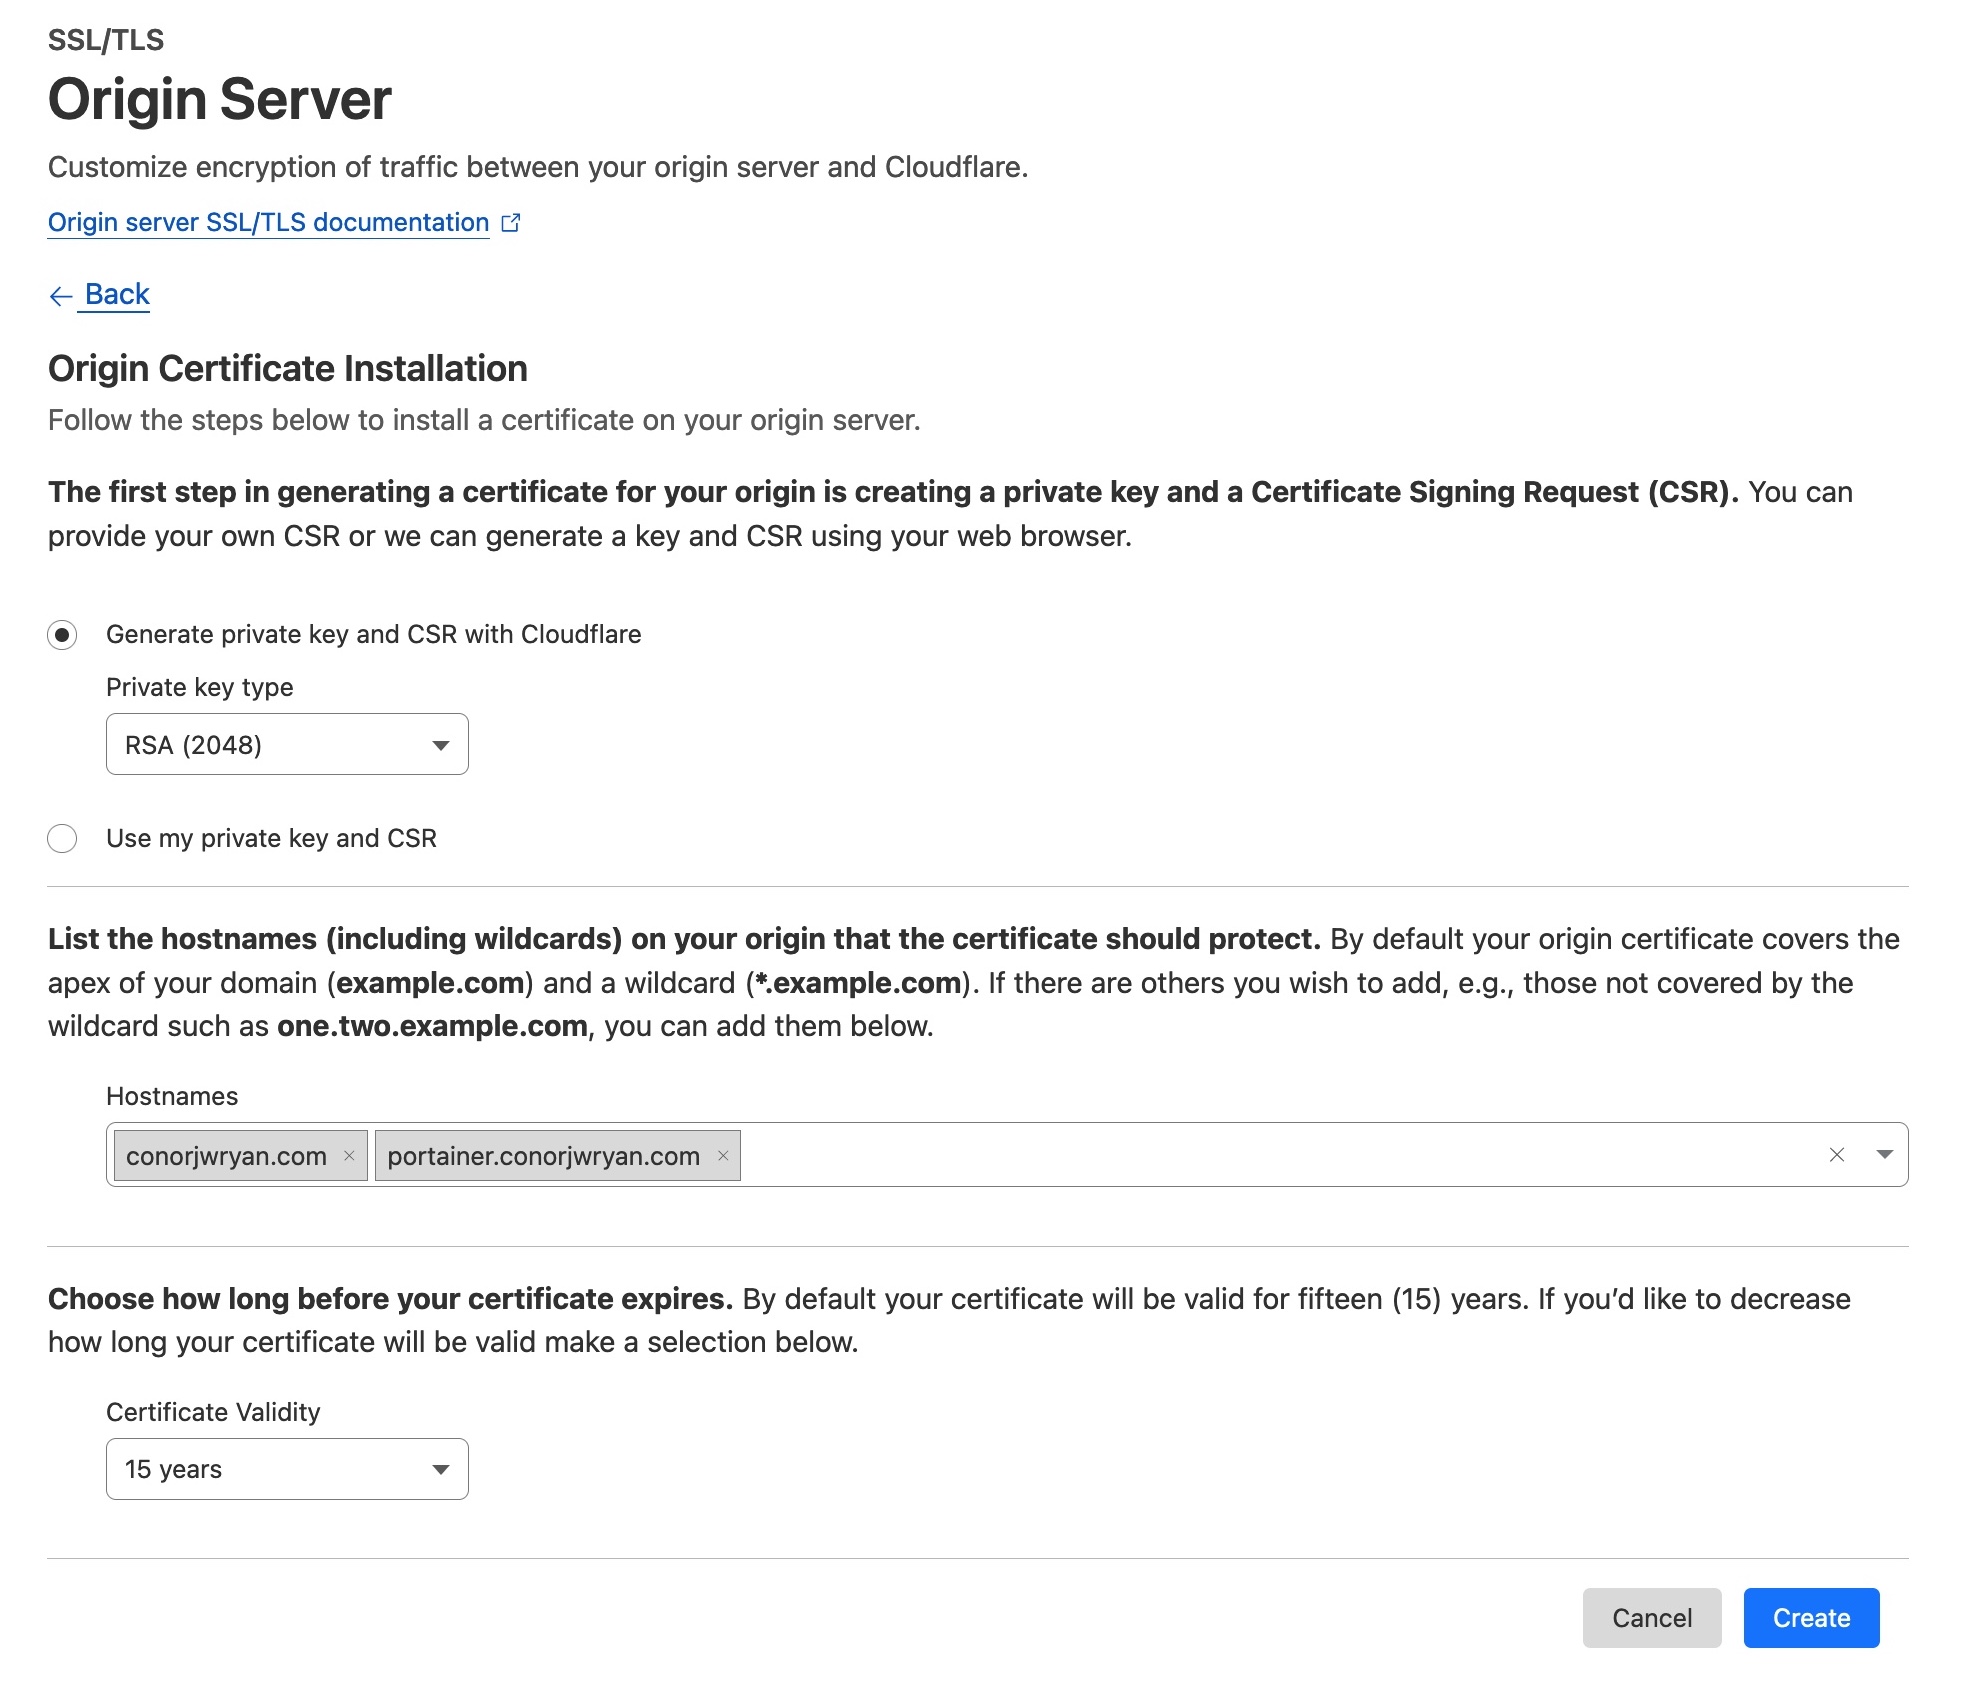 A screenshot of the origin certificate creation page